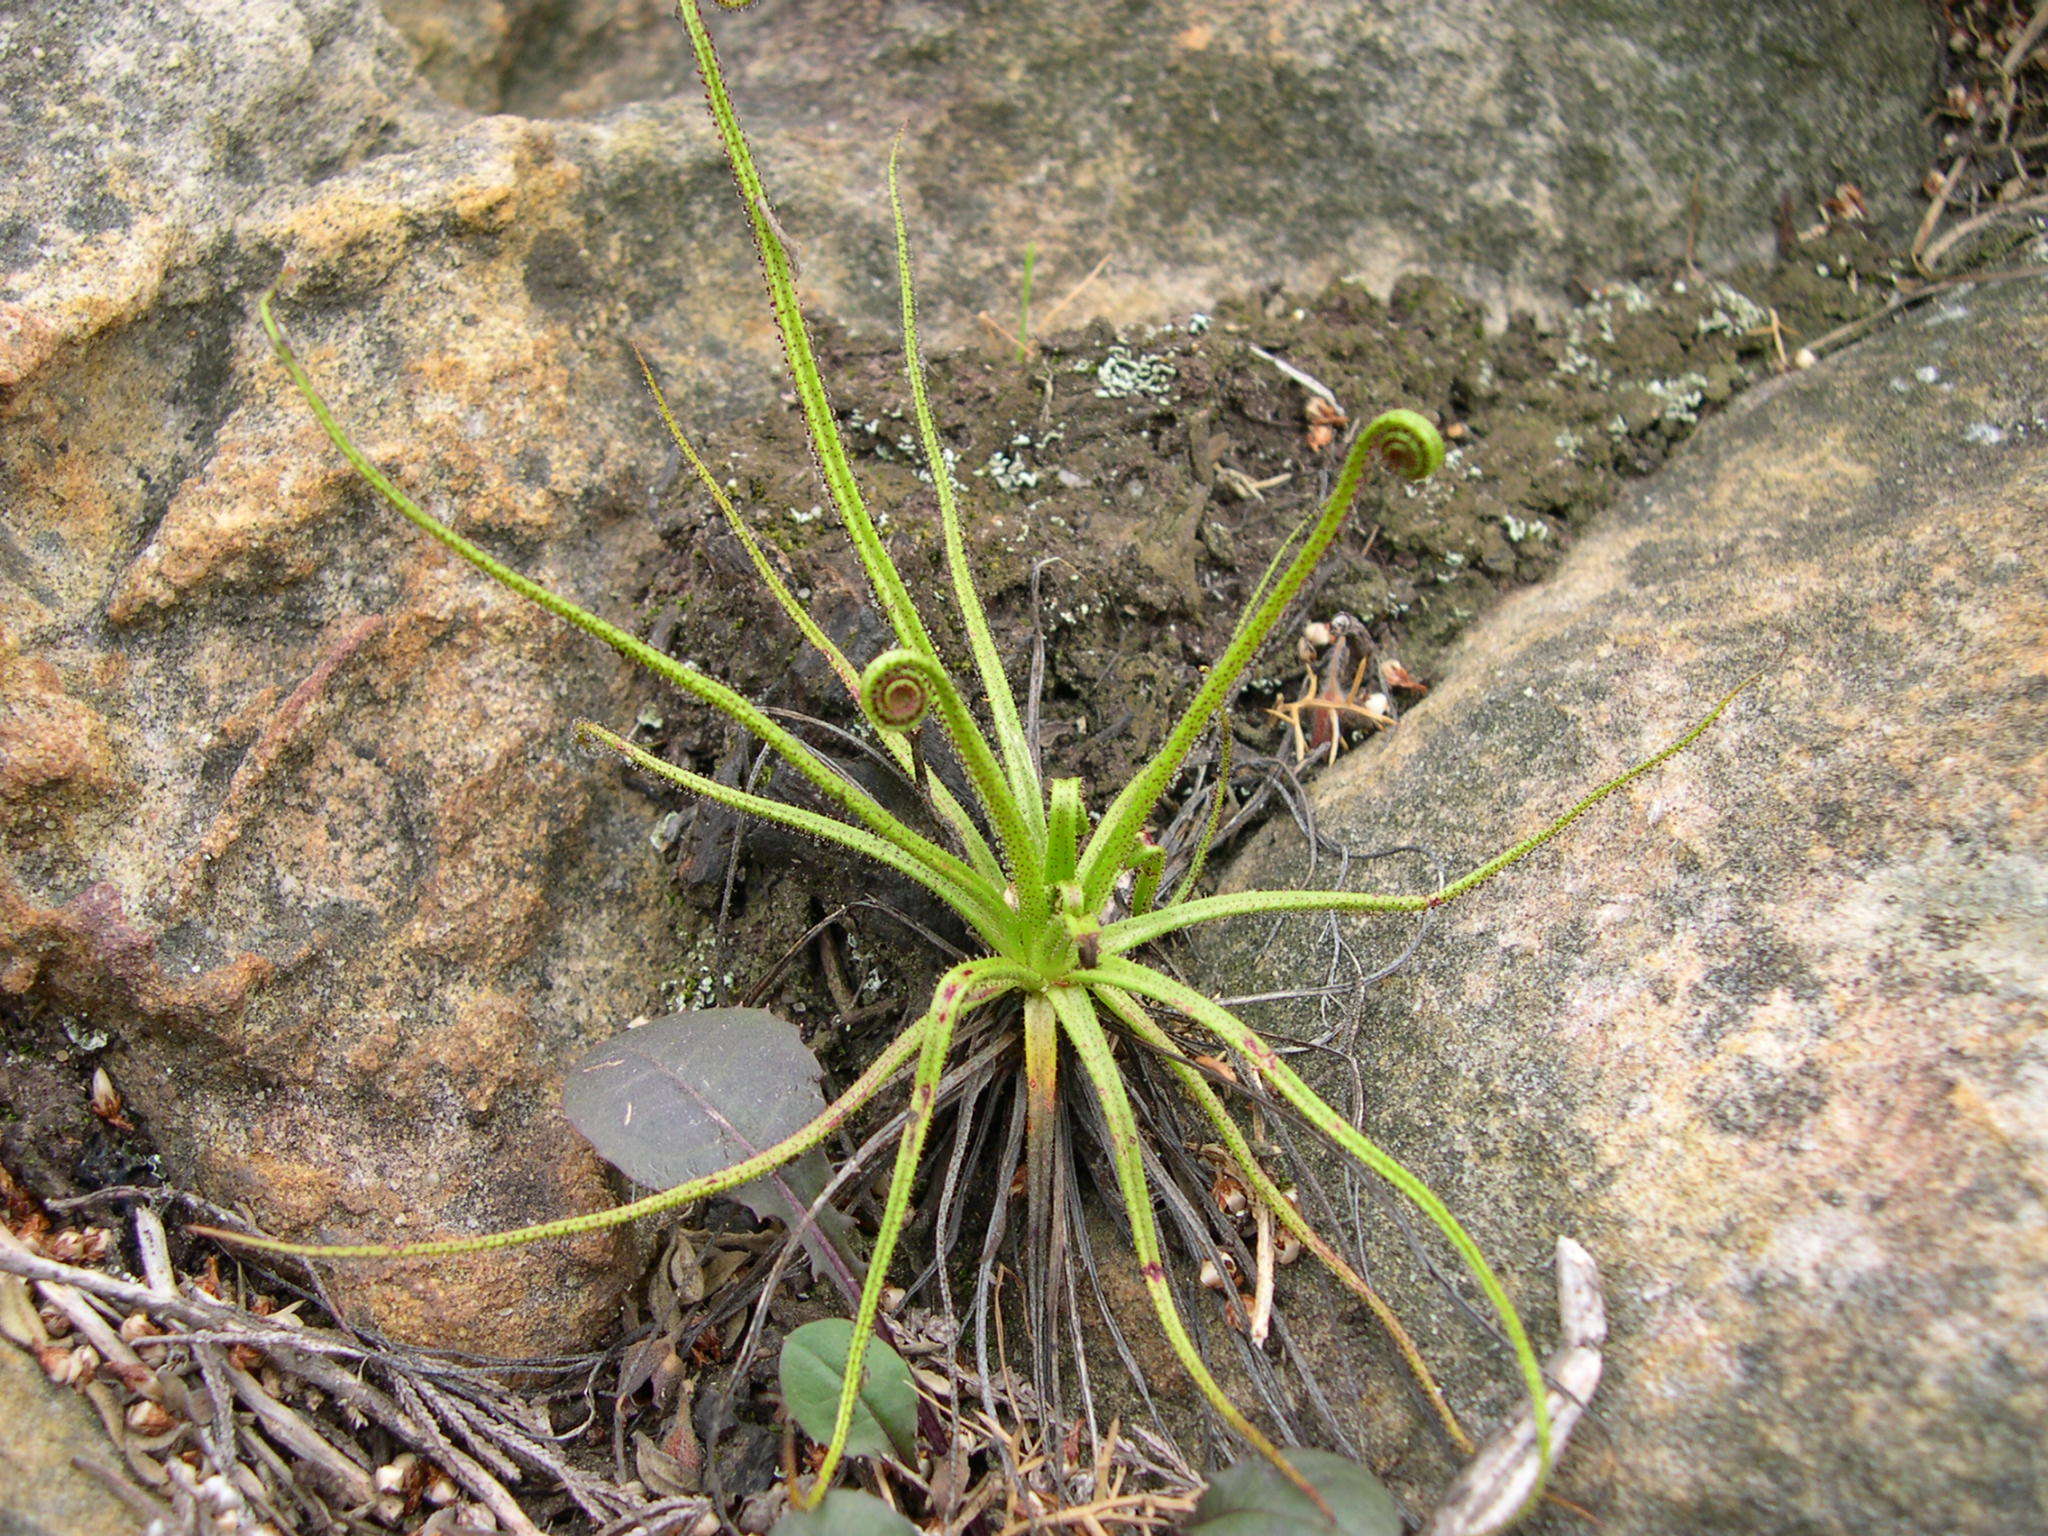 Image de Drosophyllaceae